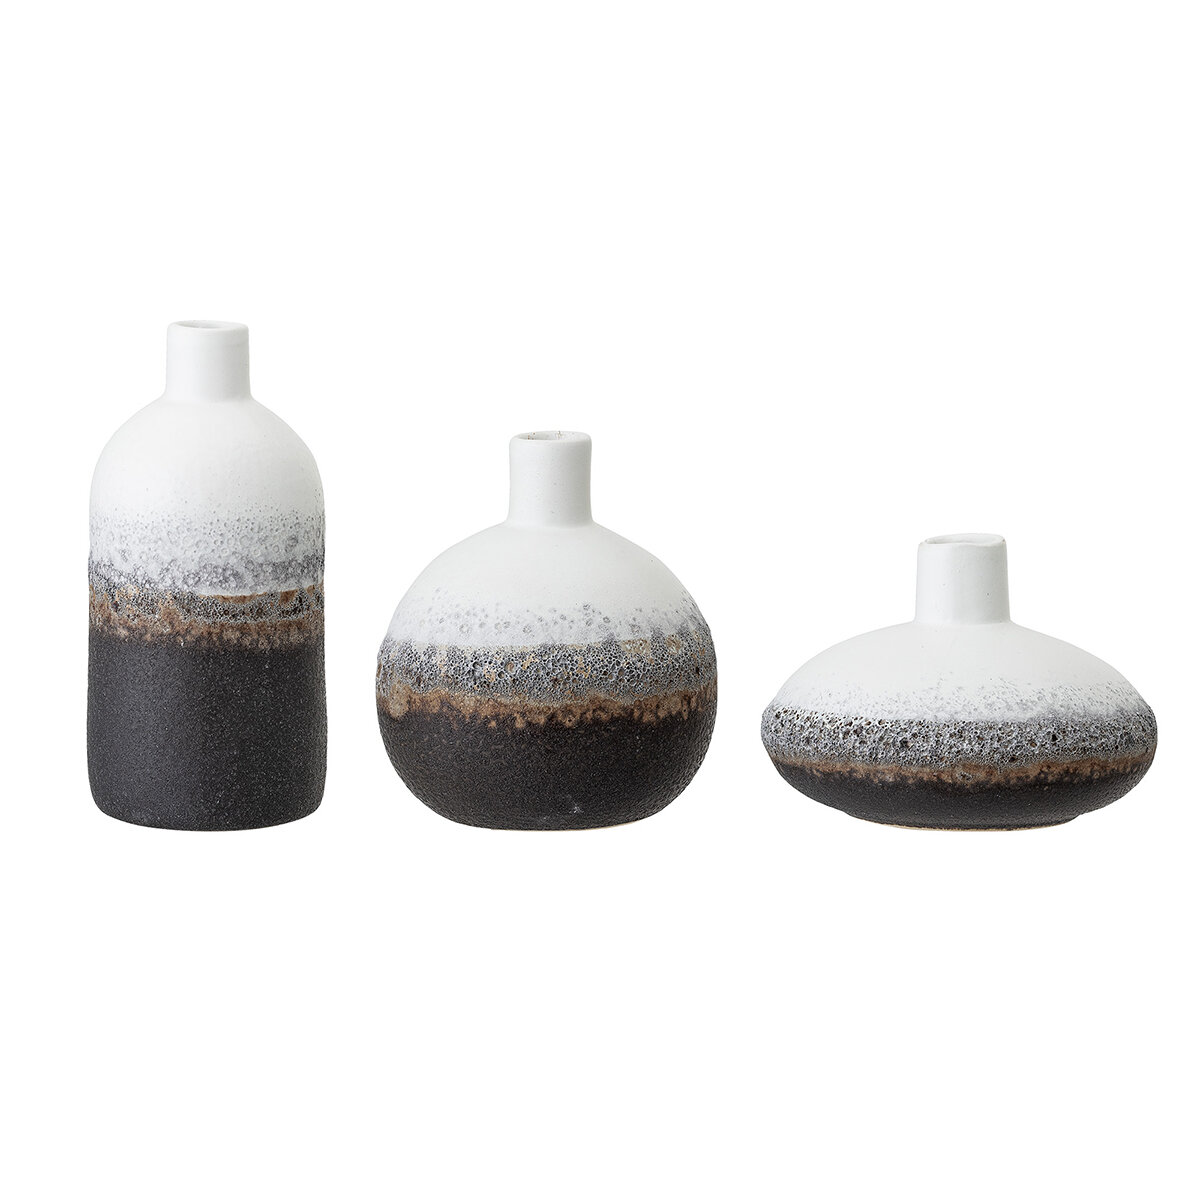 Teresa - Set of ceramic vases